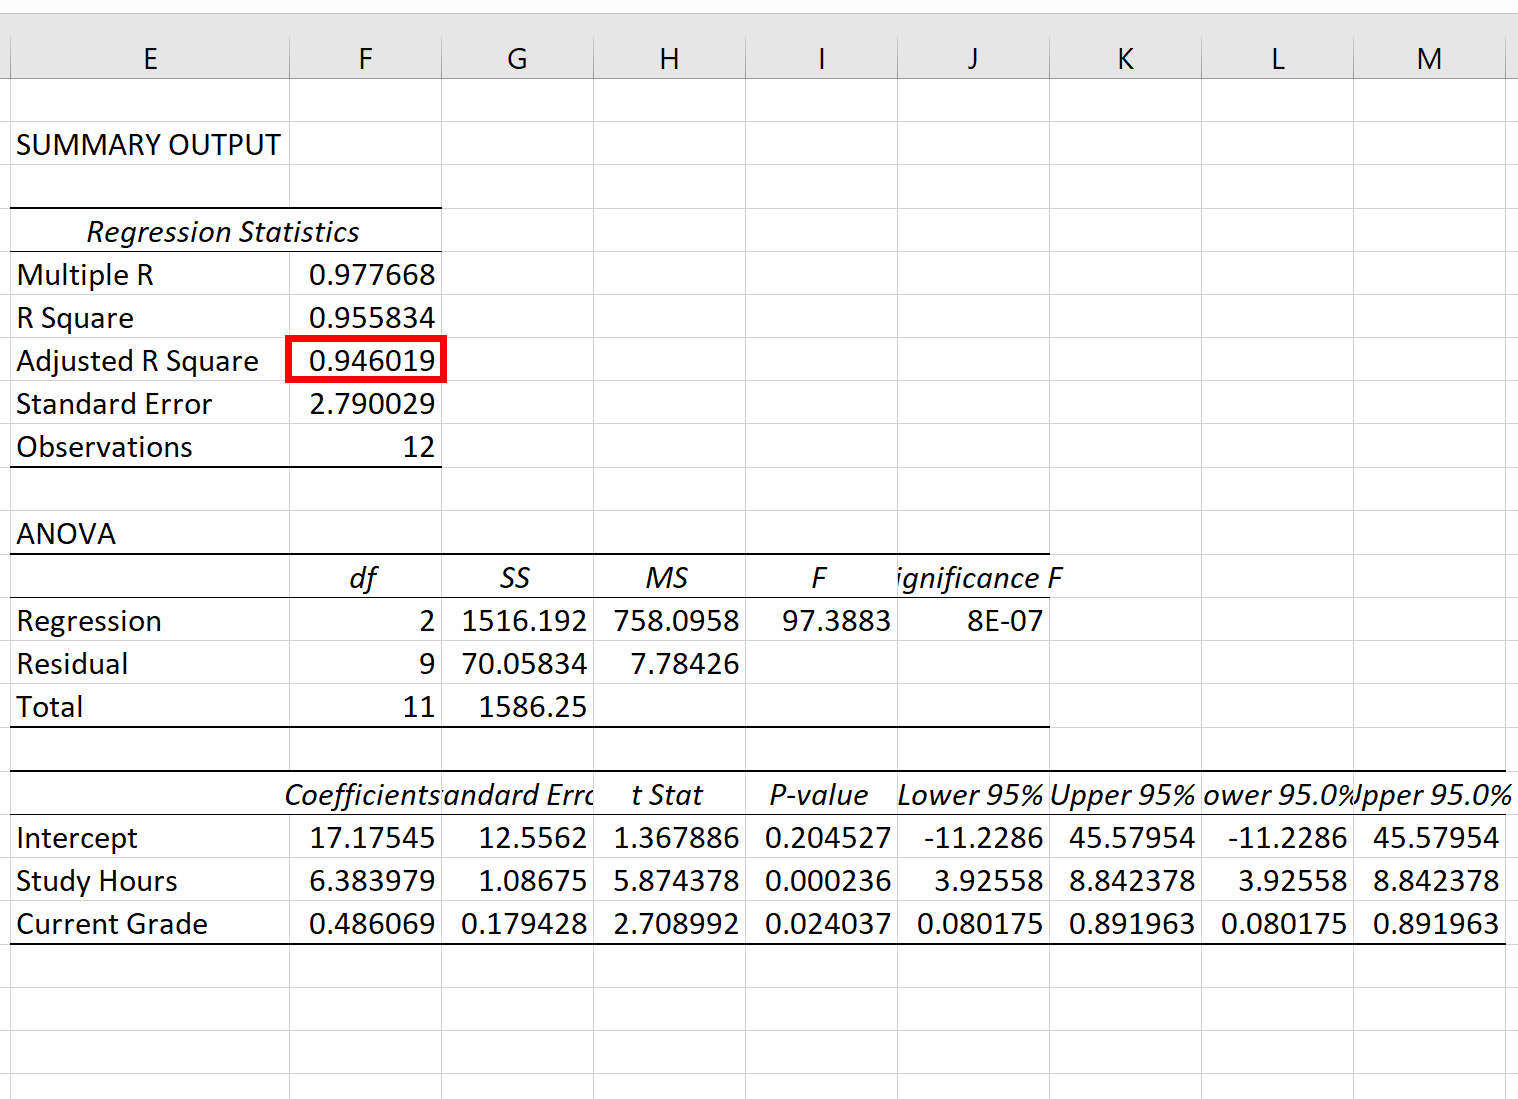 R-kuadrat yang disesuaikan di Excel